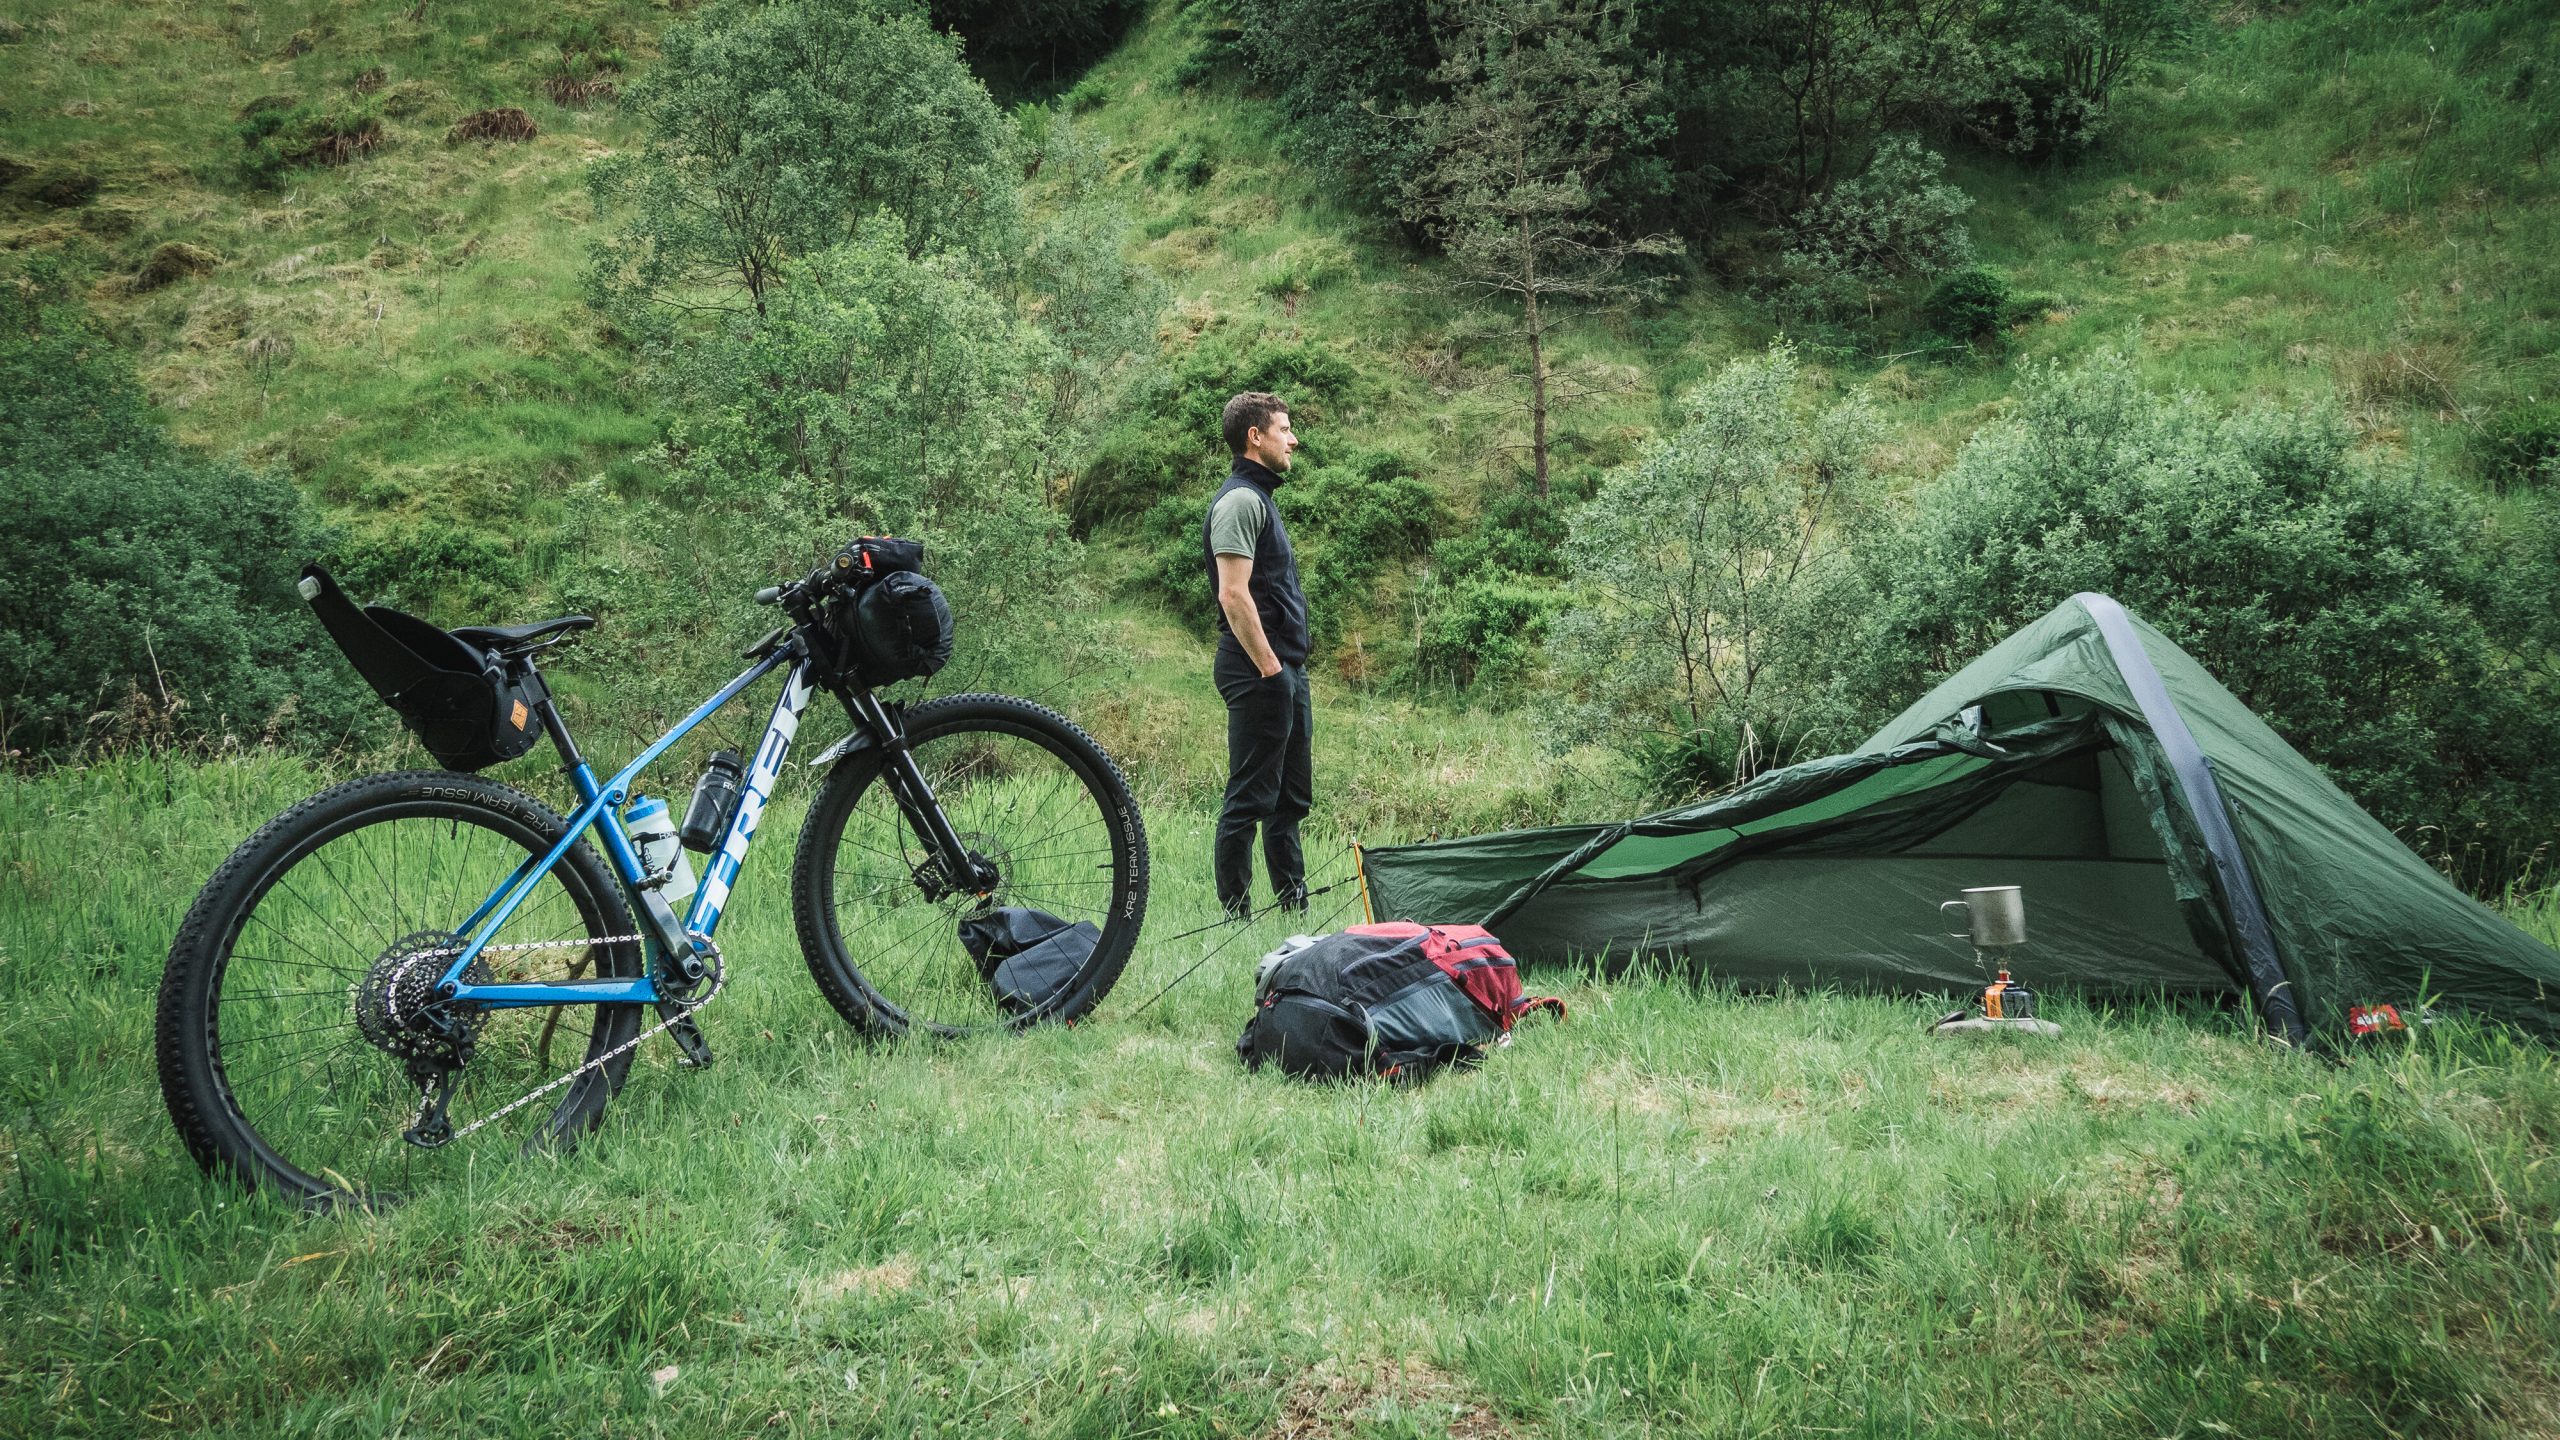 Paul Osborne, Director of The Biking Explorers, with his bike and tent.